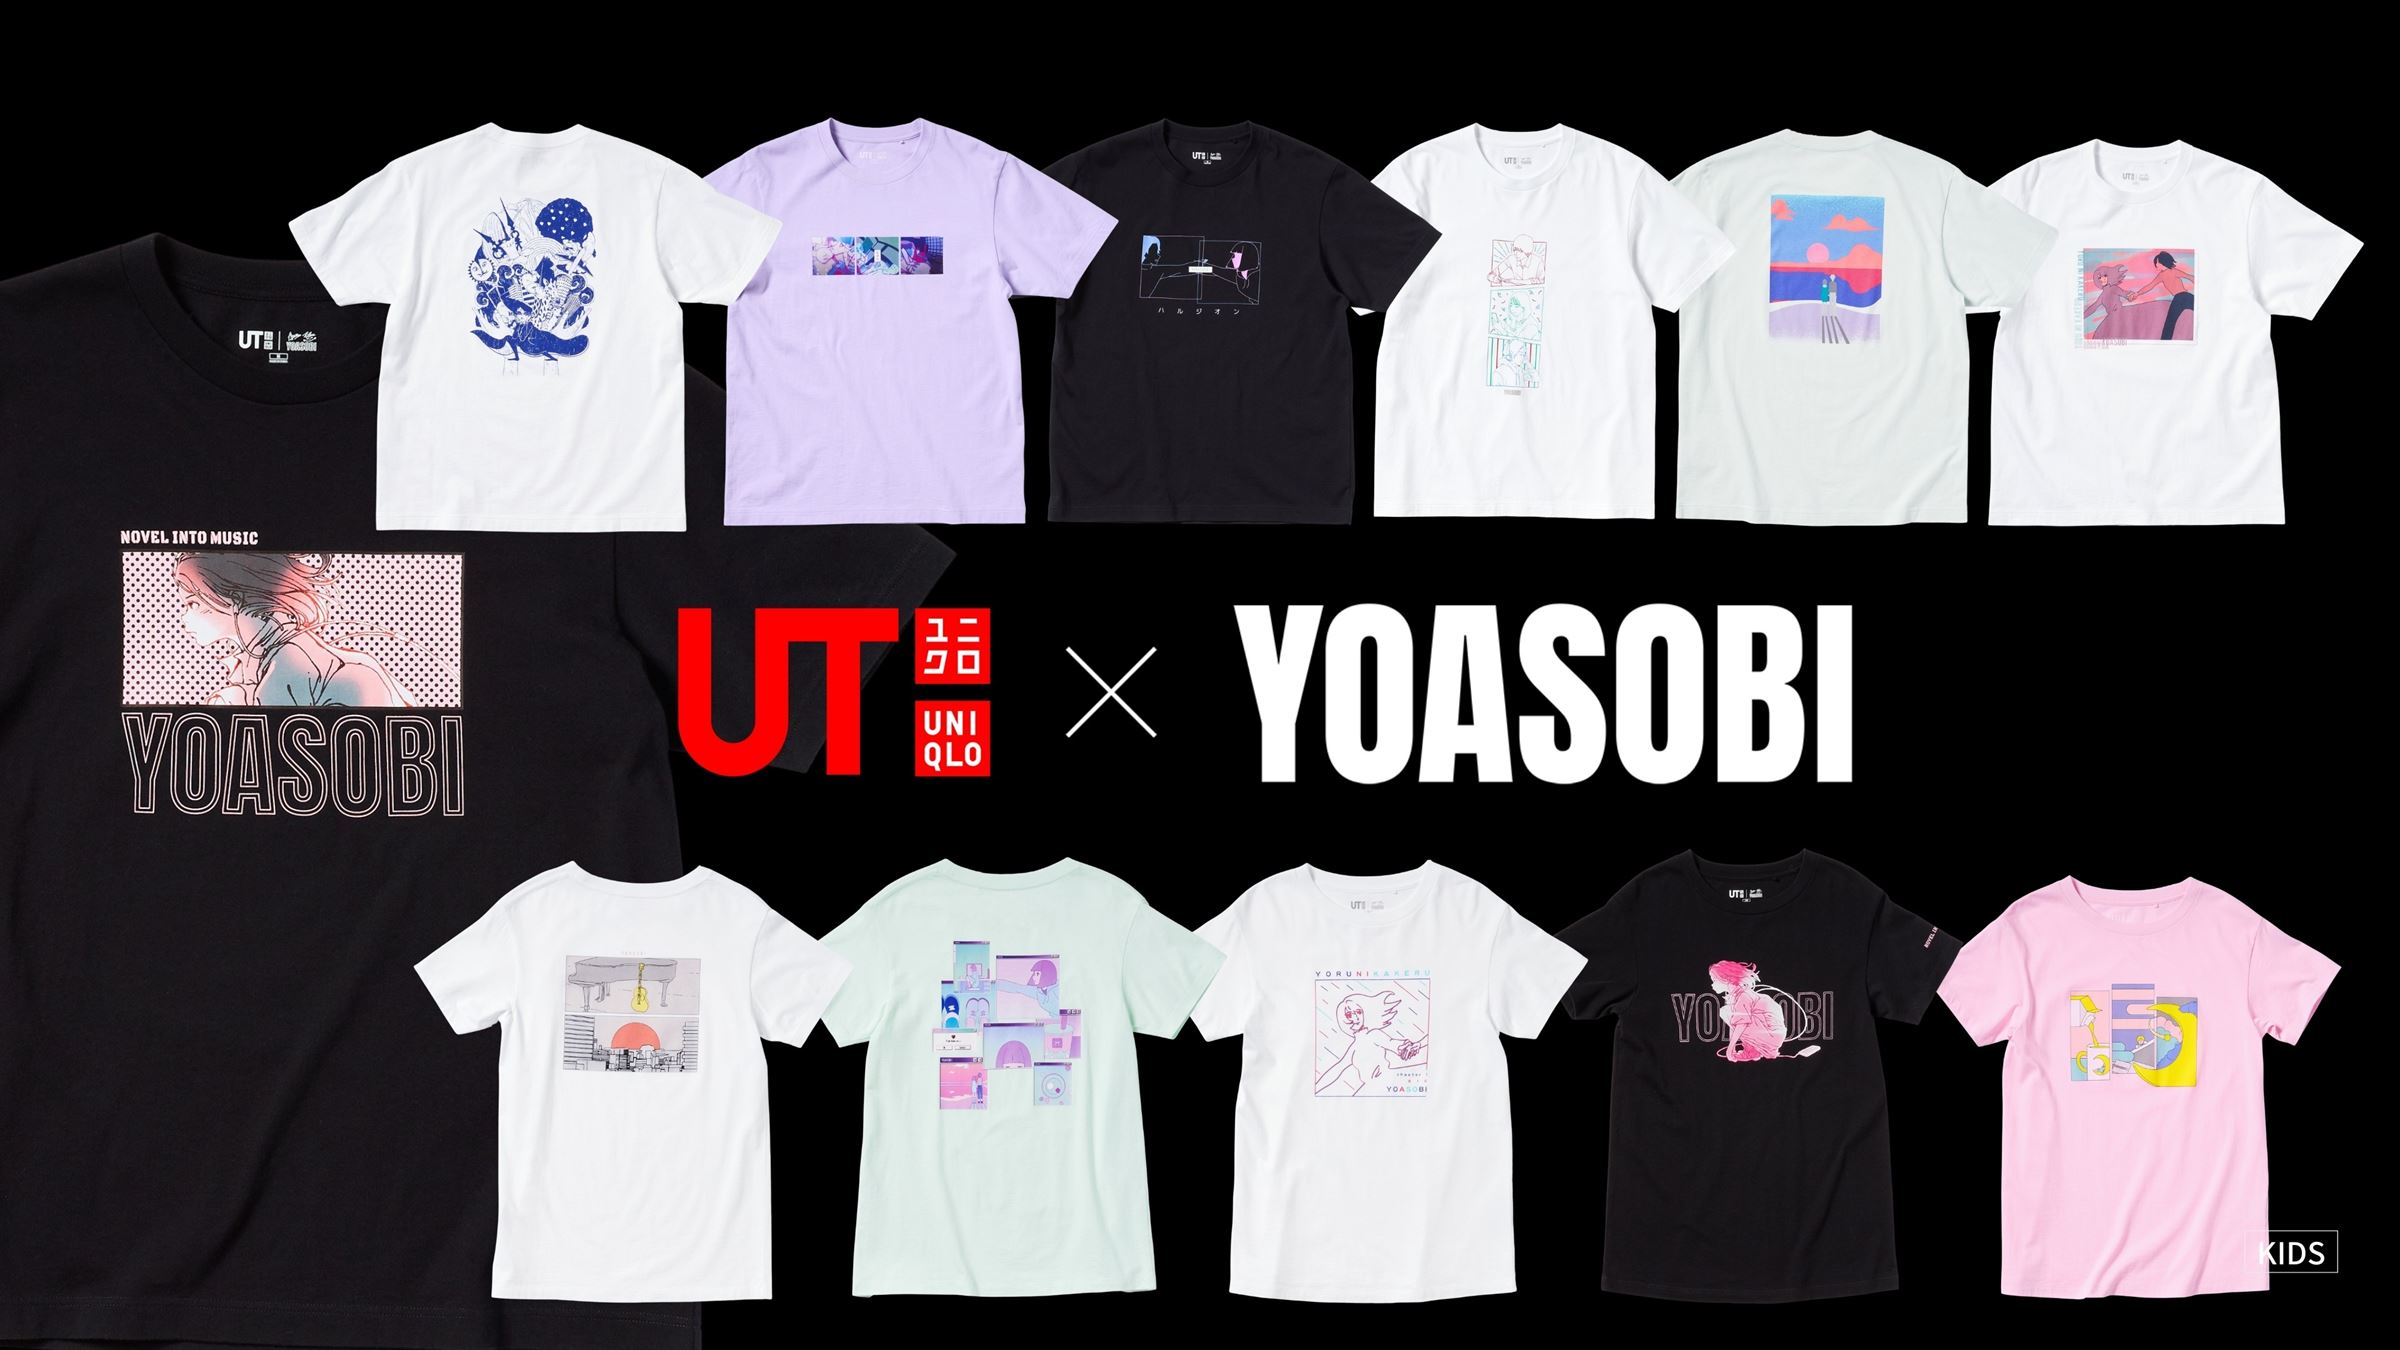 『YOASOBI UT』Tシャツラインナップ